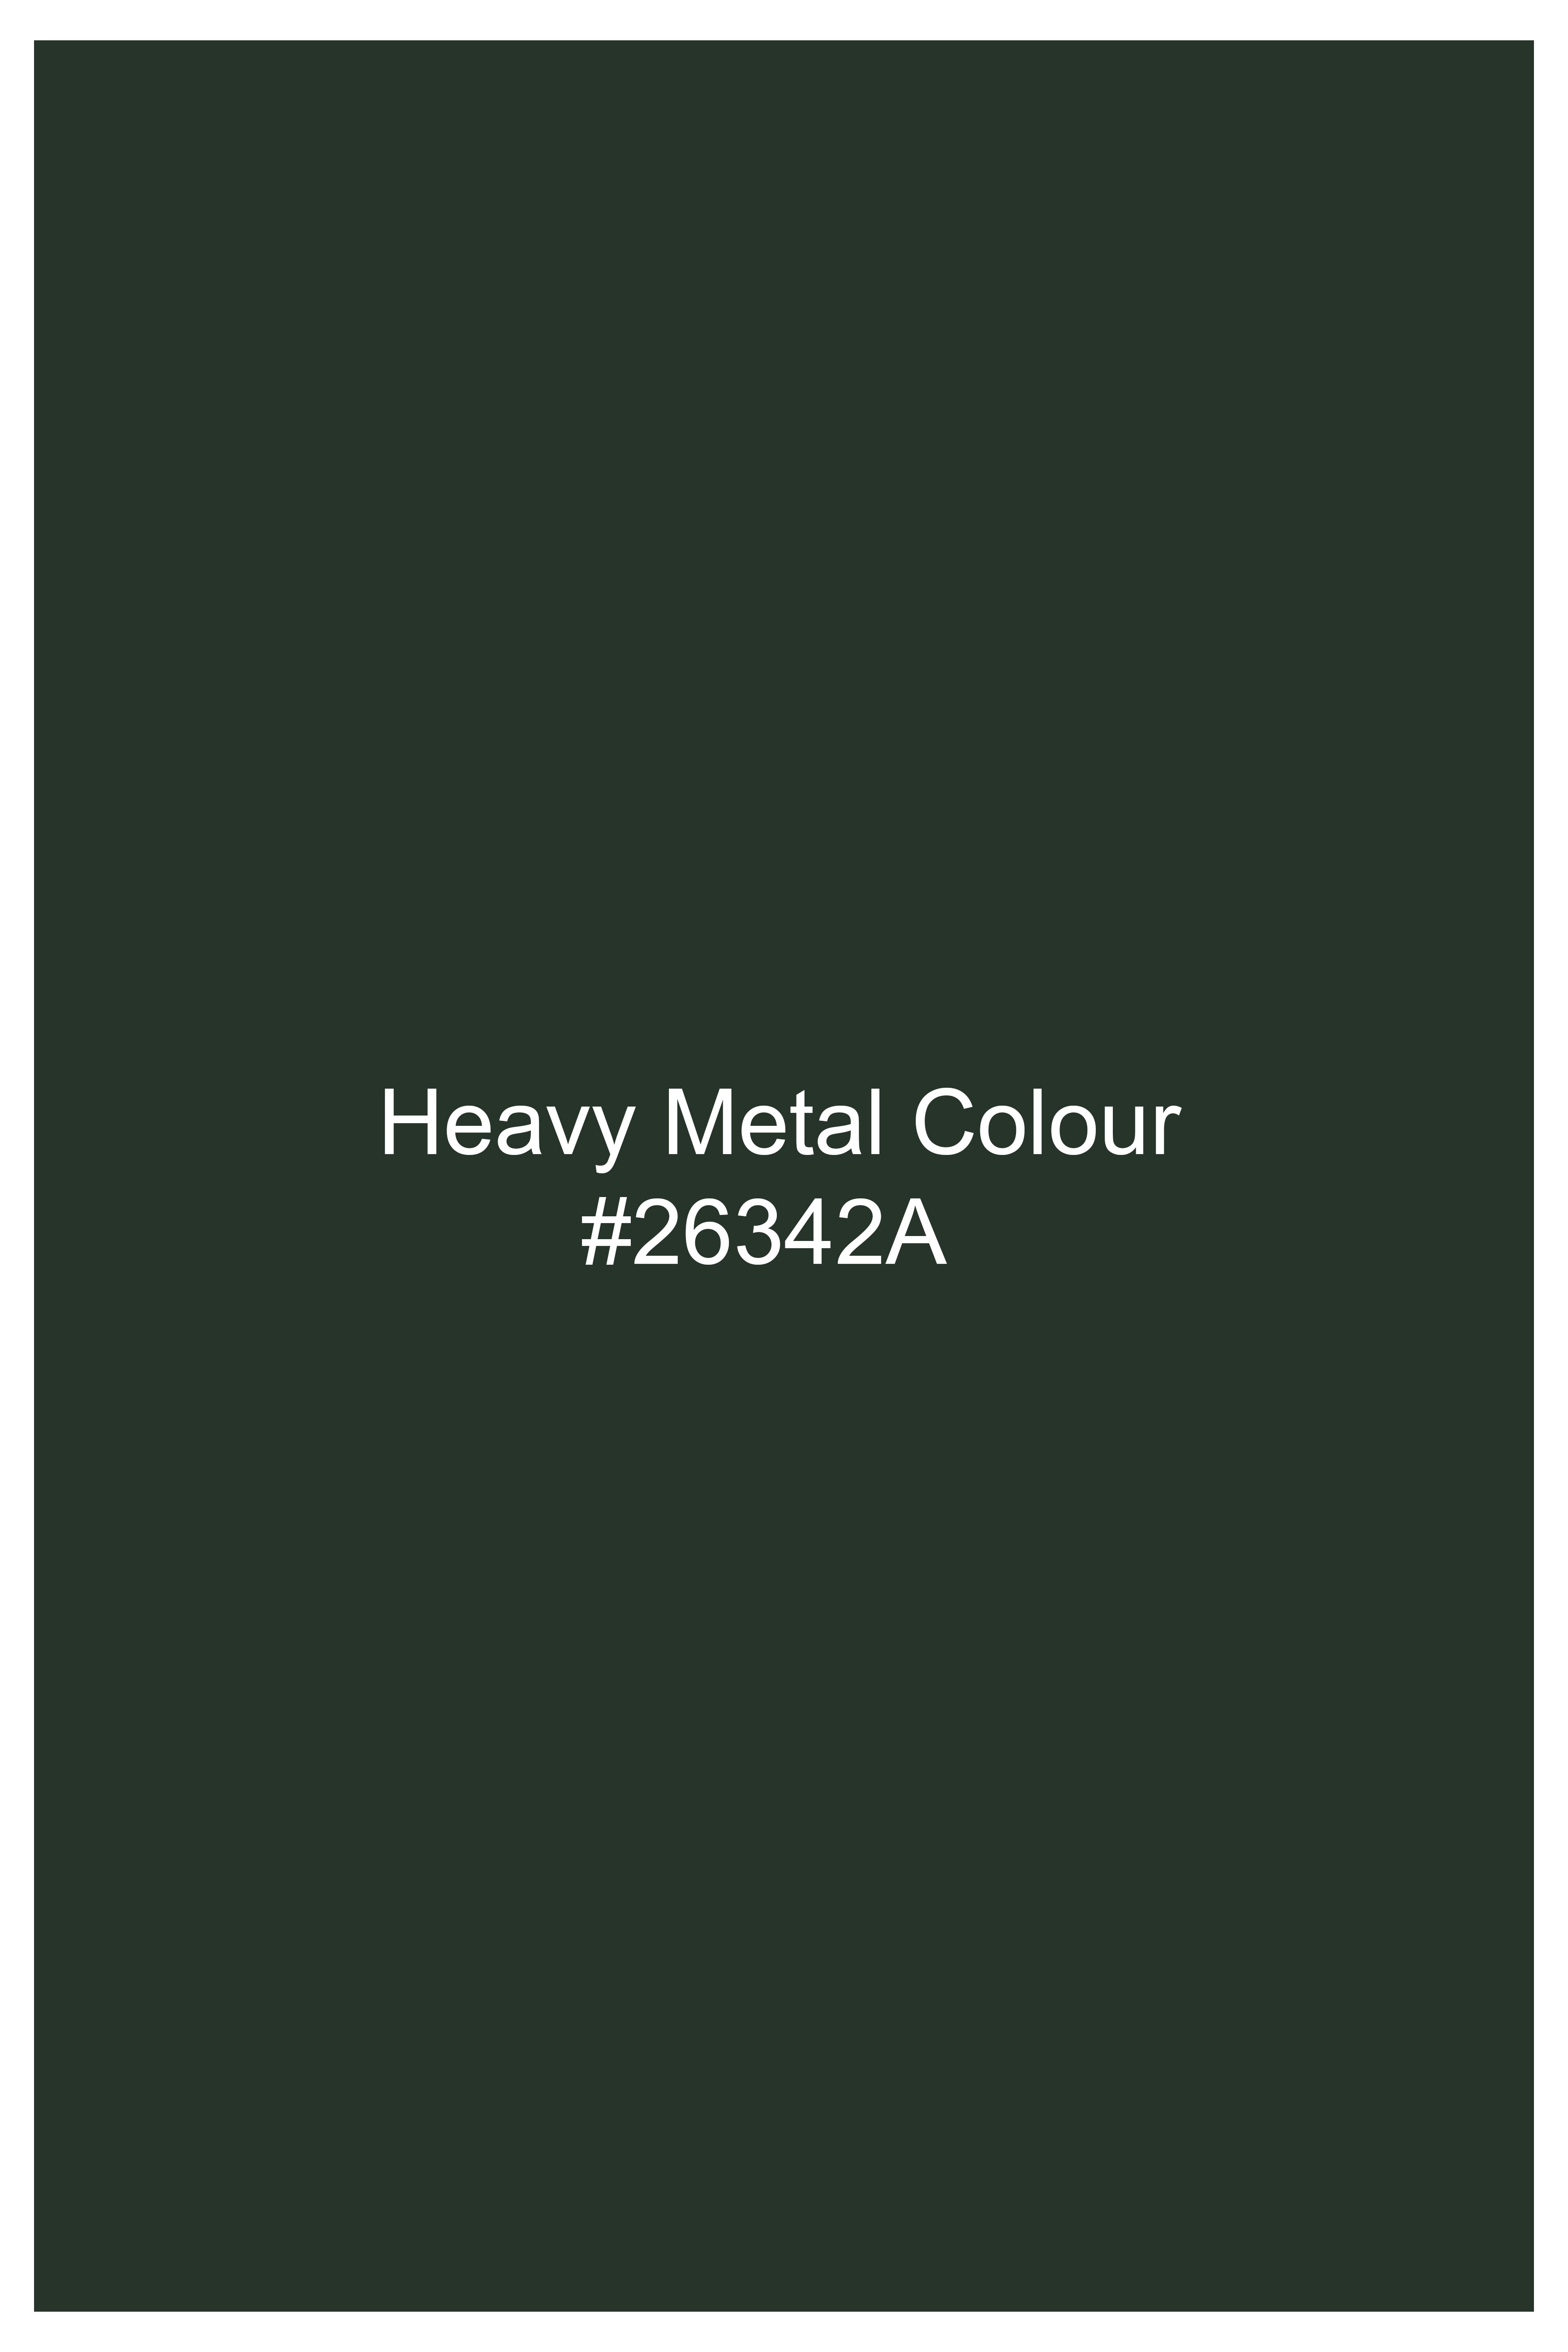 Heavy Metal Green Premium Cotton Tuxedo Stretchable Traveler Blazer BL2775-BKL-36, BL2775-BKL-38, BL2775-BKL-40, BL2775-BKL-42, BL2775-BKL-44, BL2775-BKL-46, BL2775-BKL-48, BL2775-BKL-50, BL2775-BKL-52, BL2775-BKL-54, BL2775-BKL-56, BL2775-BKL-58, BL2775-BKL-60